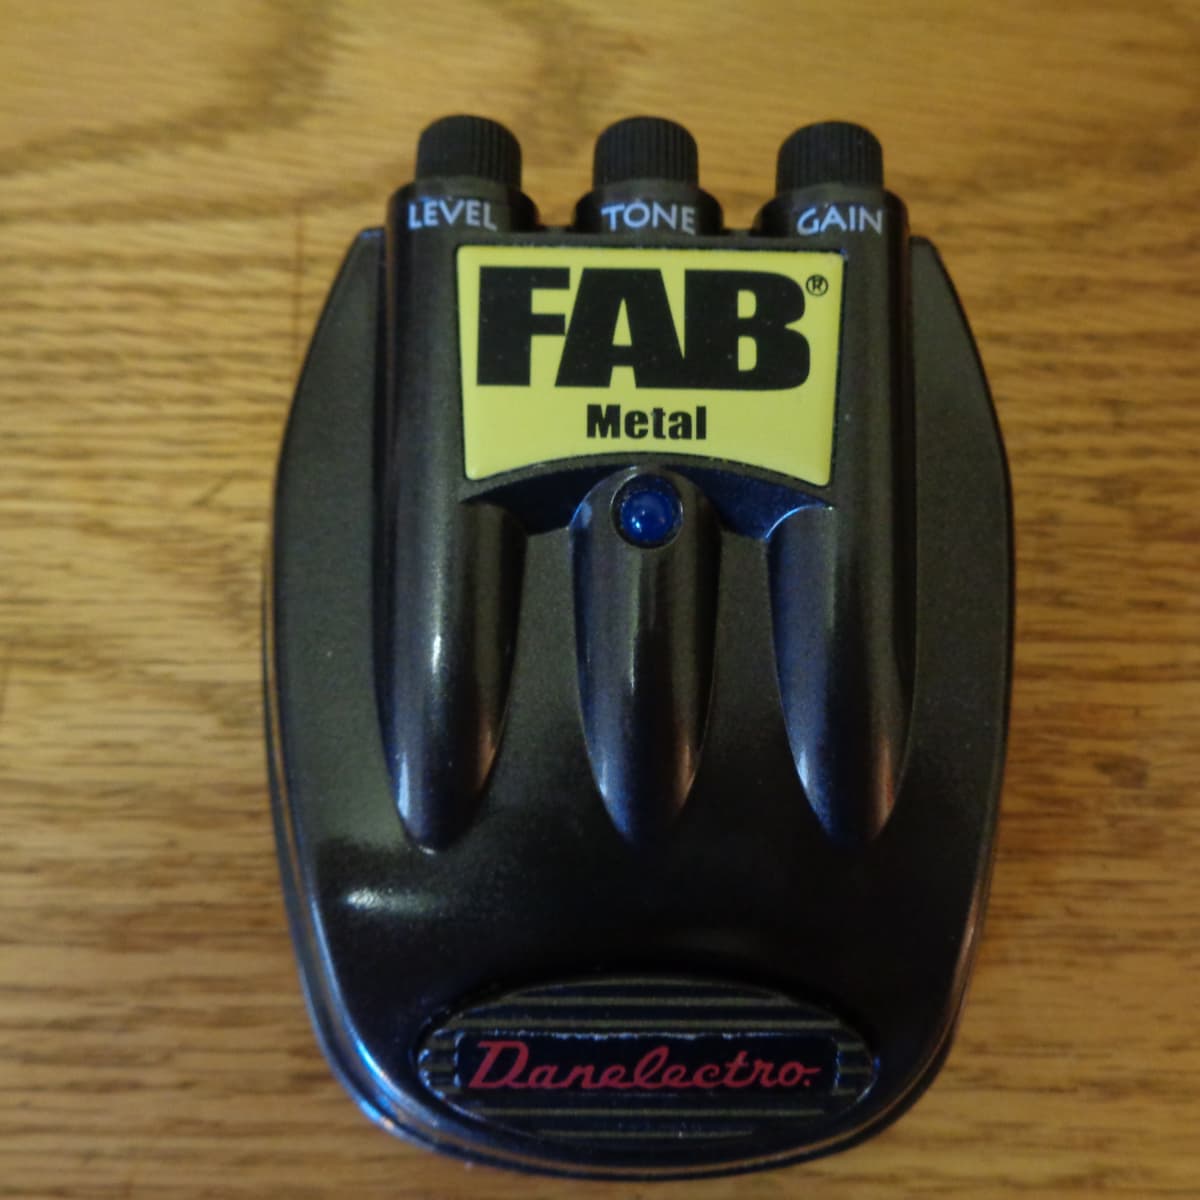 Cheap Distortion Pedal Review: The Danelectro Fab Metal Pedal